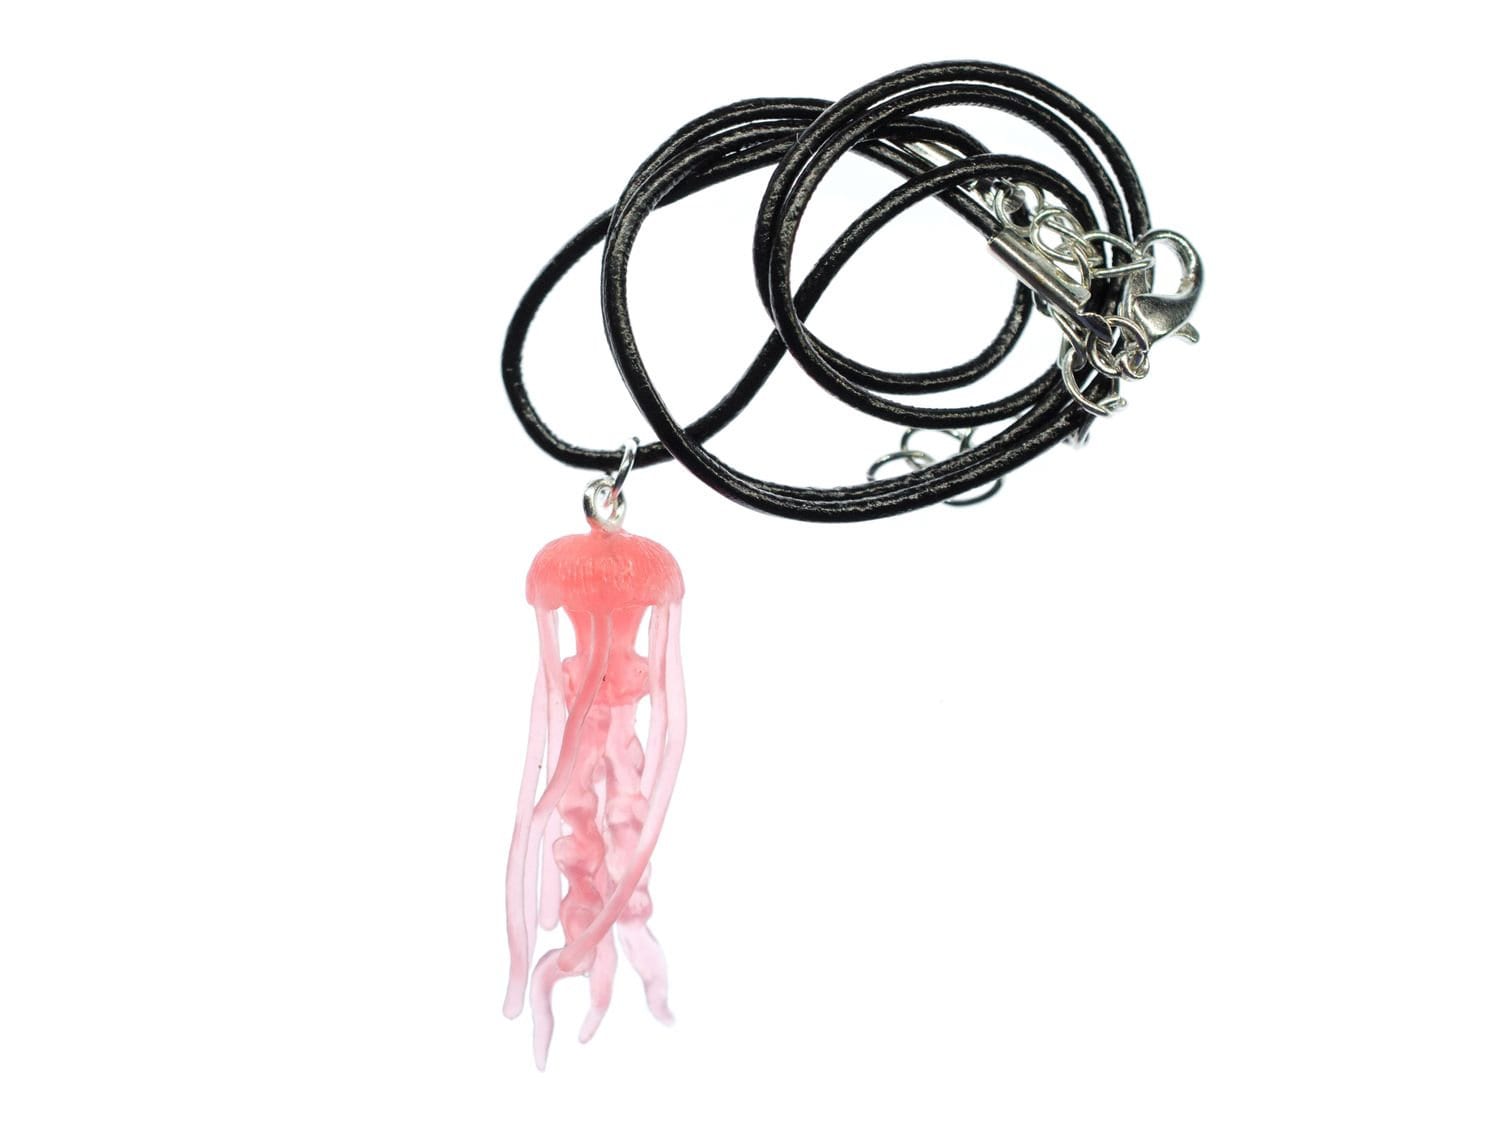 Qualle Meduse Kette Halskette Miniblings Lederkette Medusa Feuerqualle Lederband von Miniblings